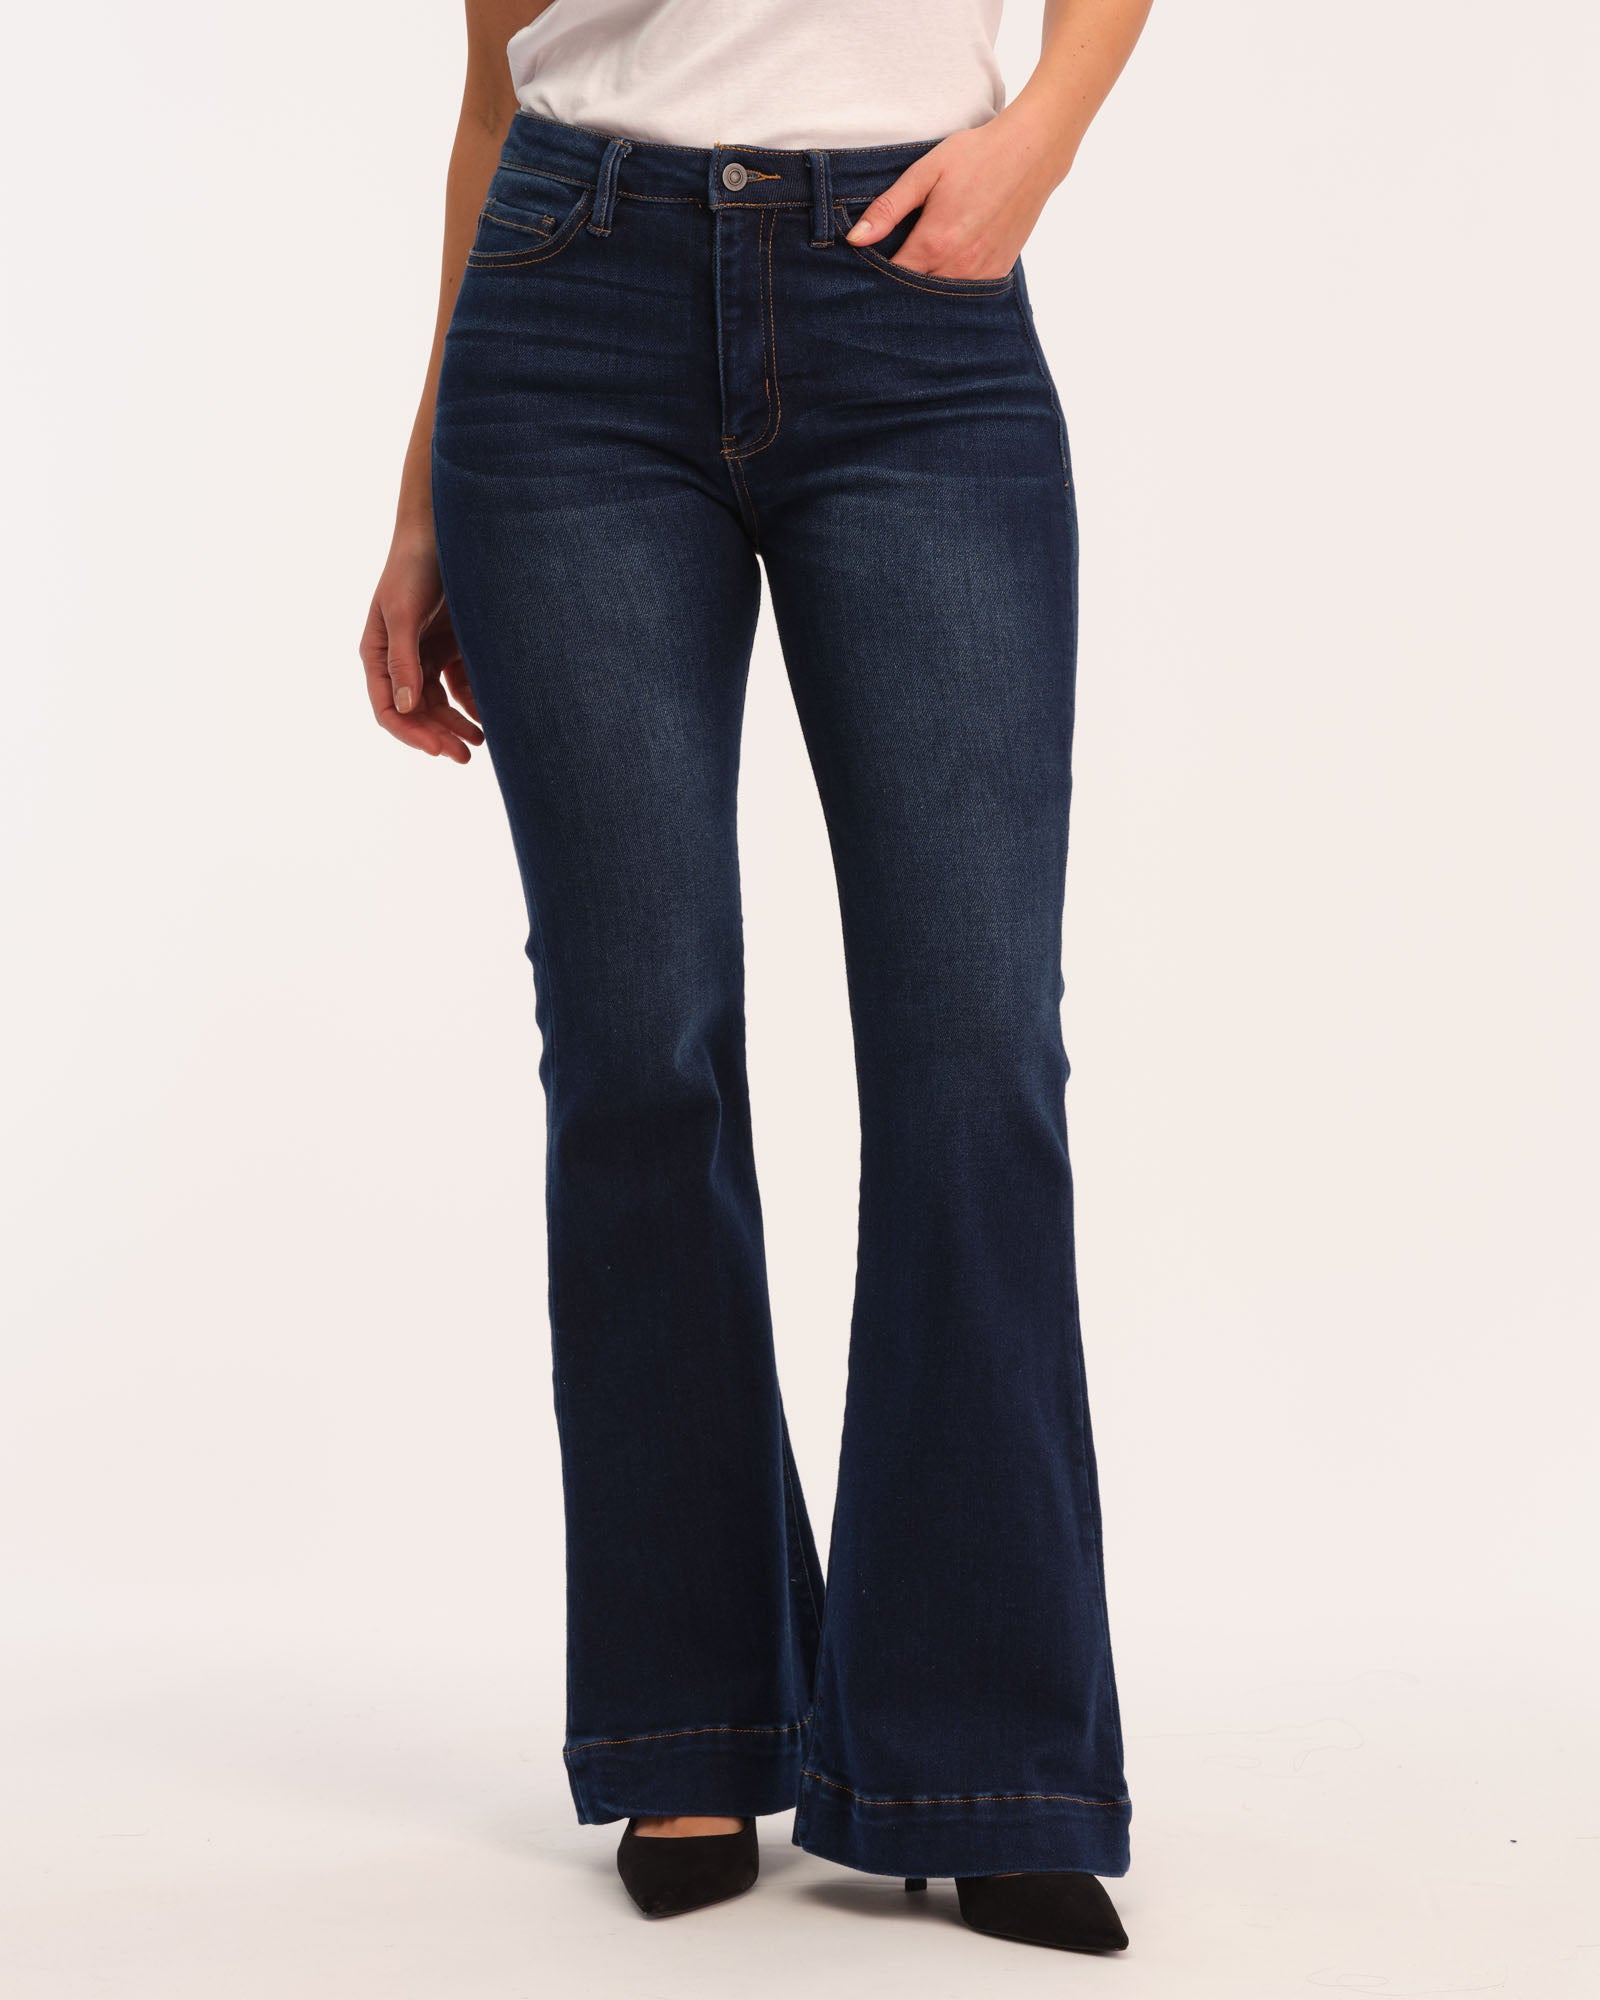 Shop Elie Elie Tahari Women's 5-Pocket Stretch Denim Flare Jeans | JANE + MERCER